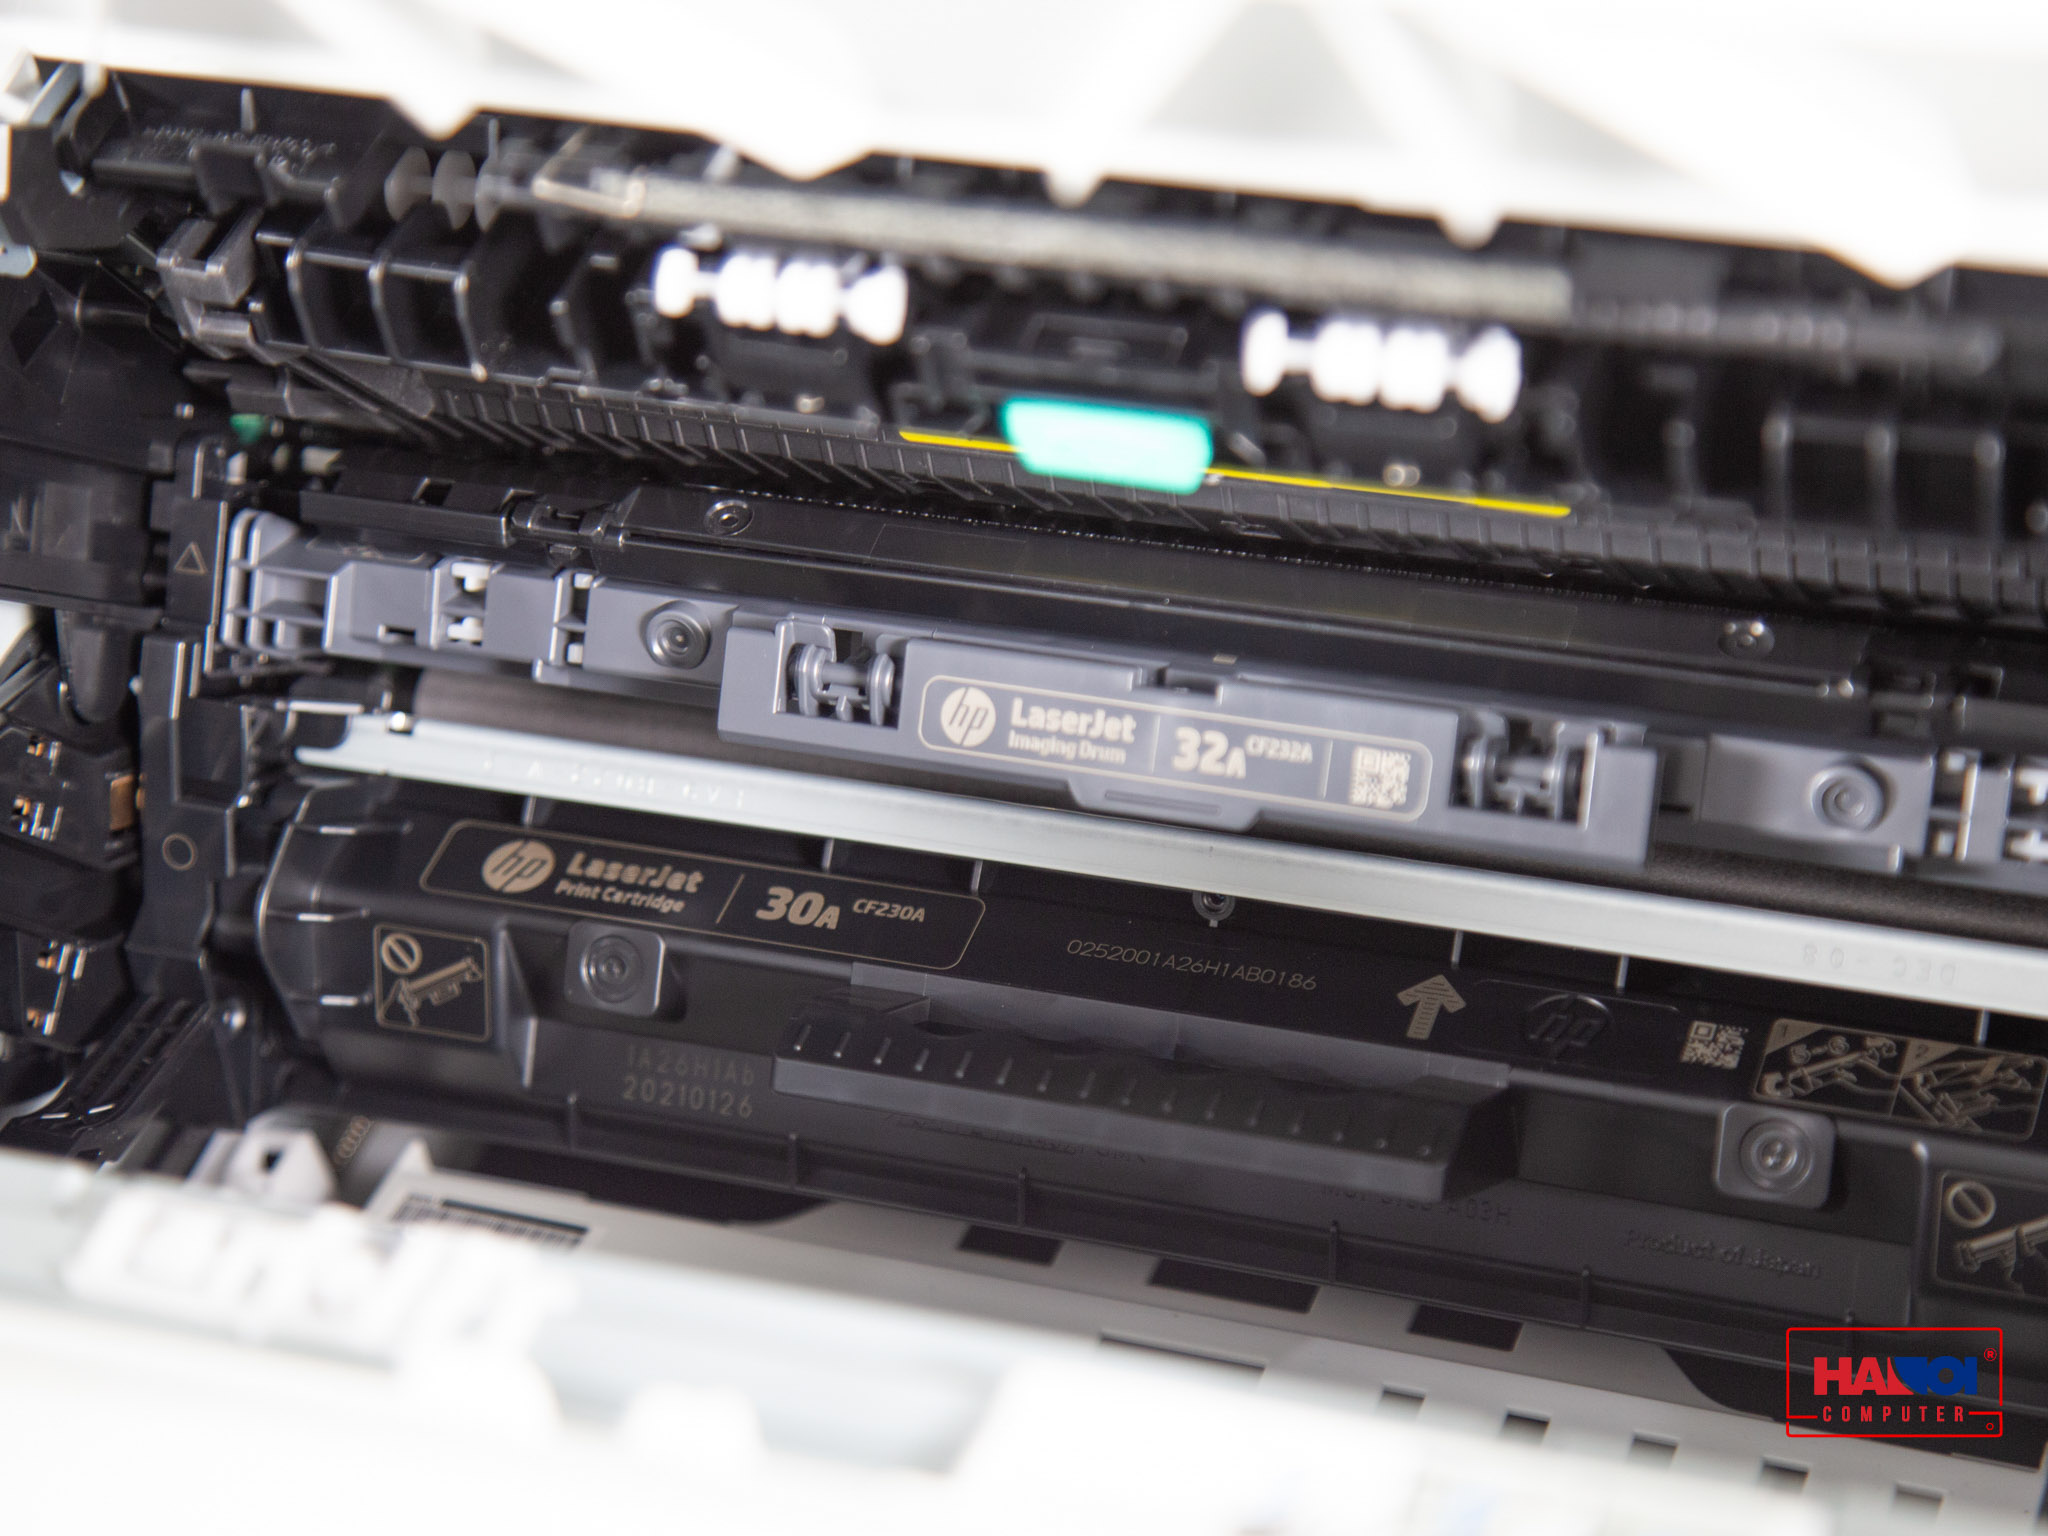 Toner Cartridge HP 30A Black LaserJet - CF230A